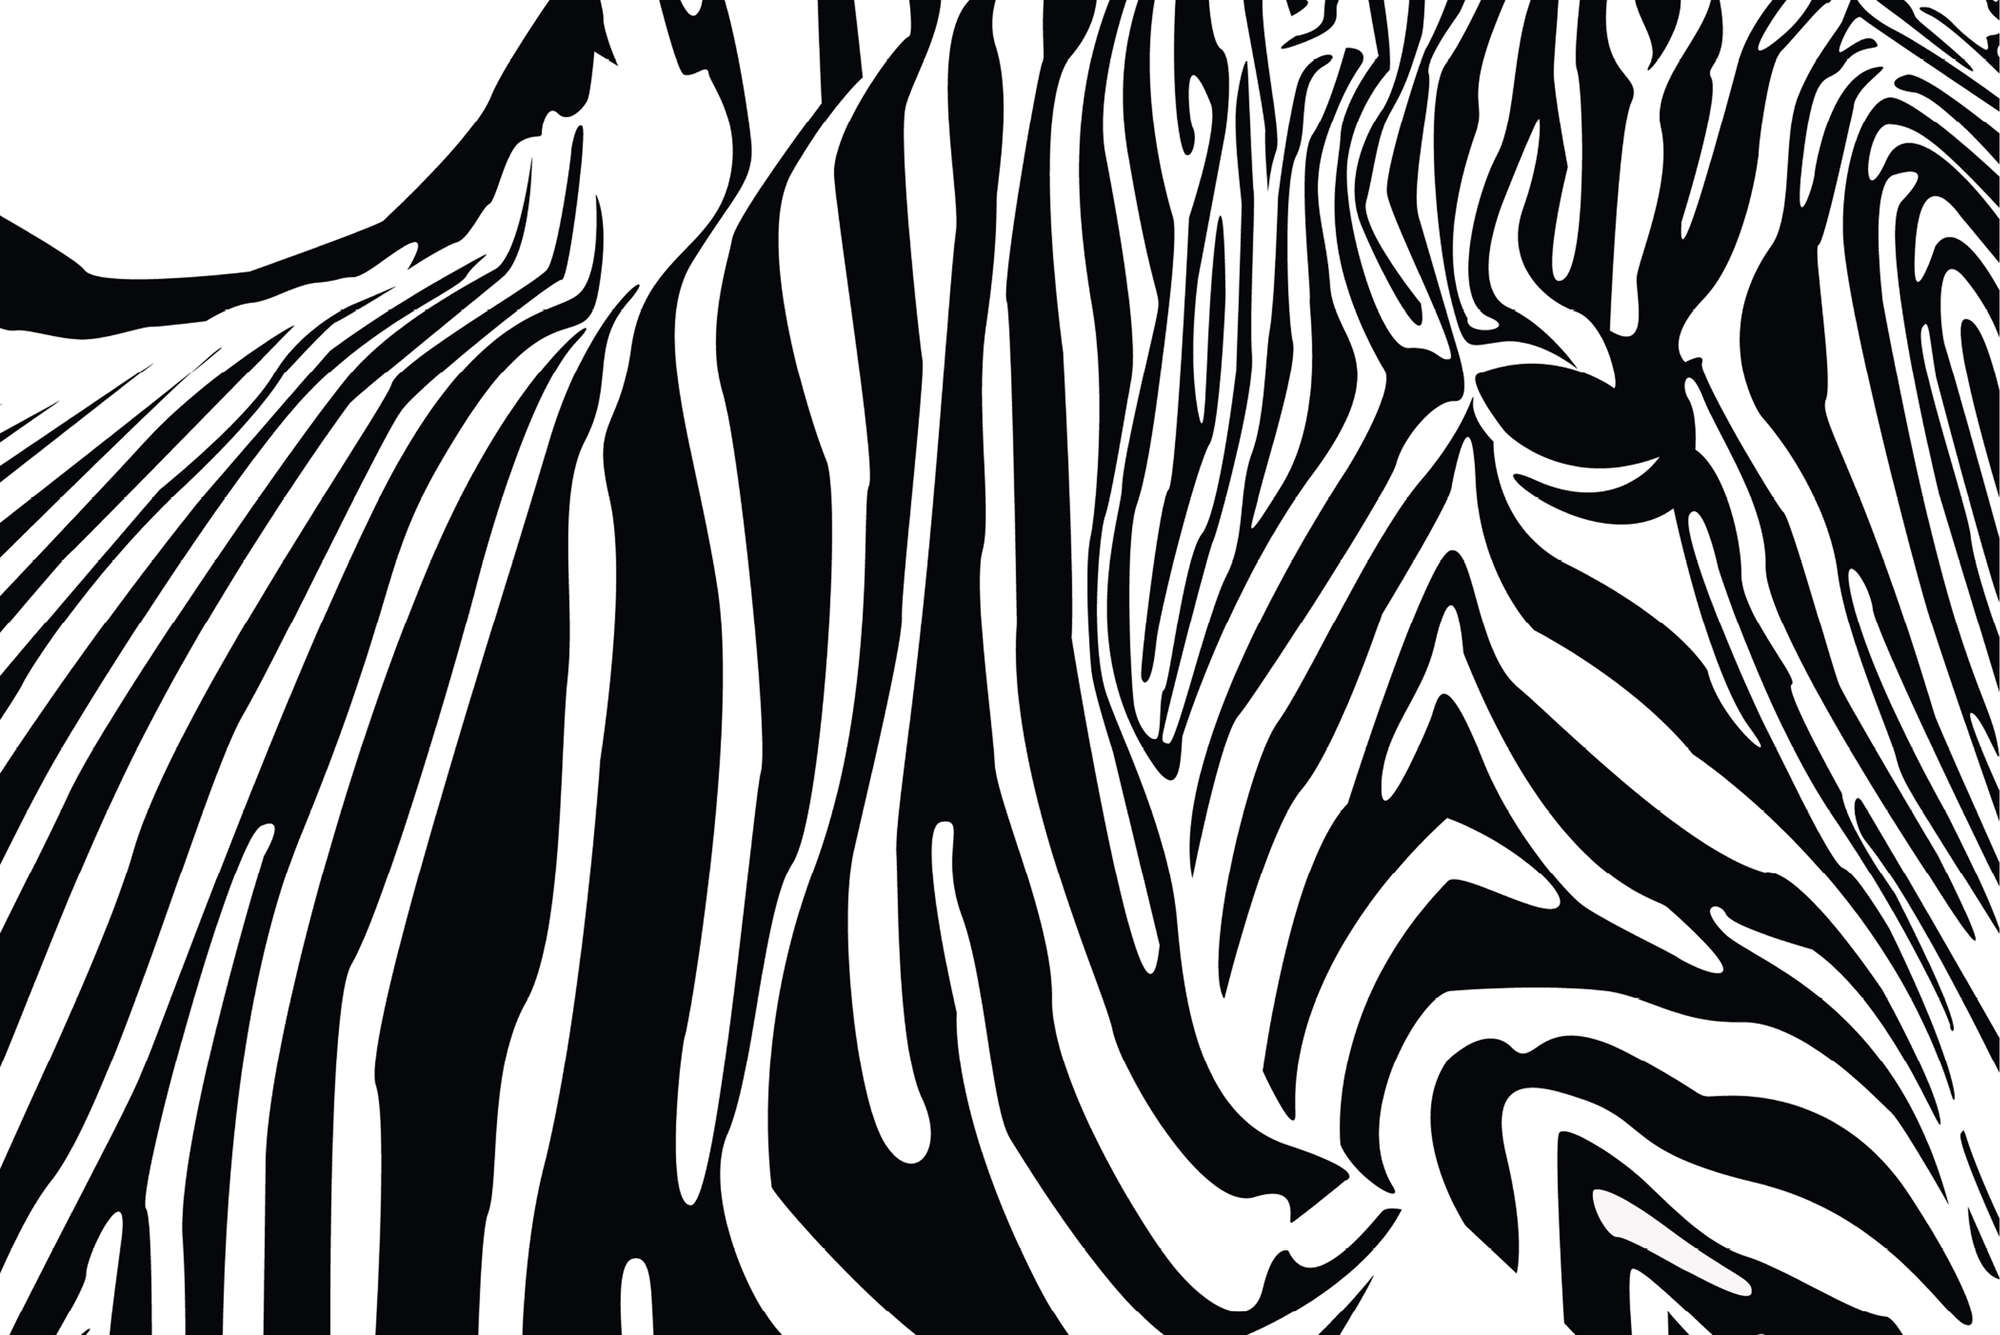             Fototapete mit Zebra Muster – Premium Glattvlies
        